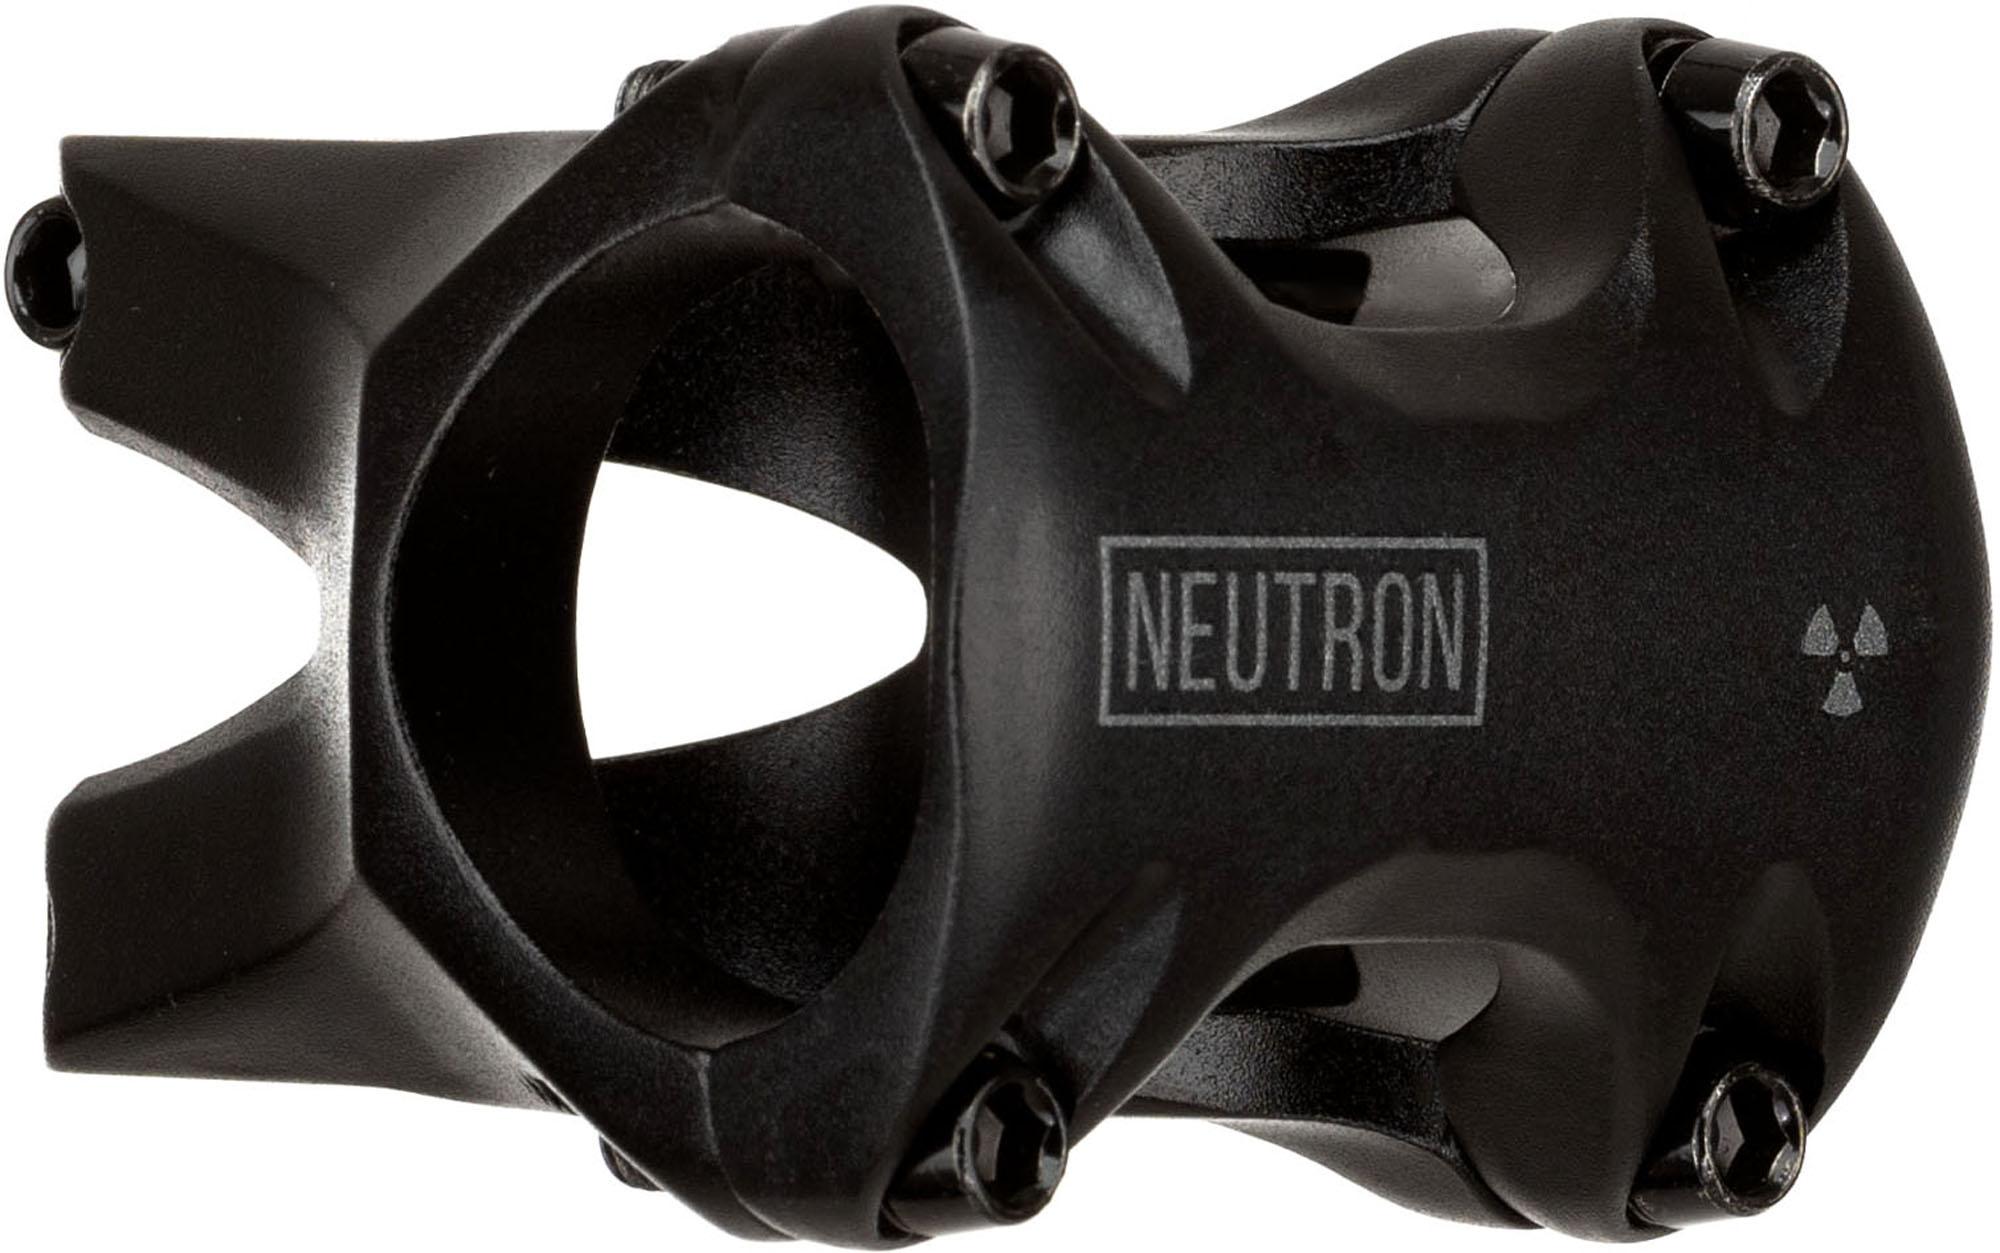 Nukeproof Neutron Am Stem  Black/grey